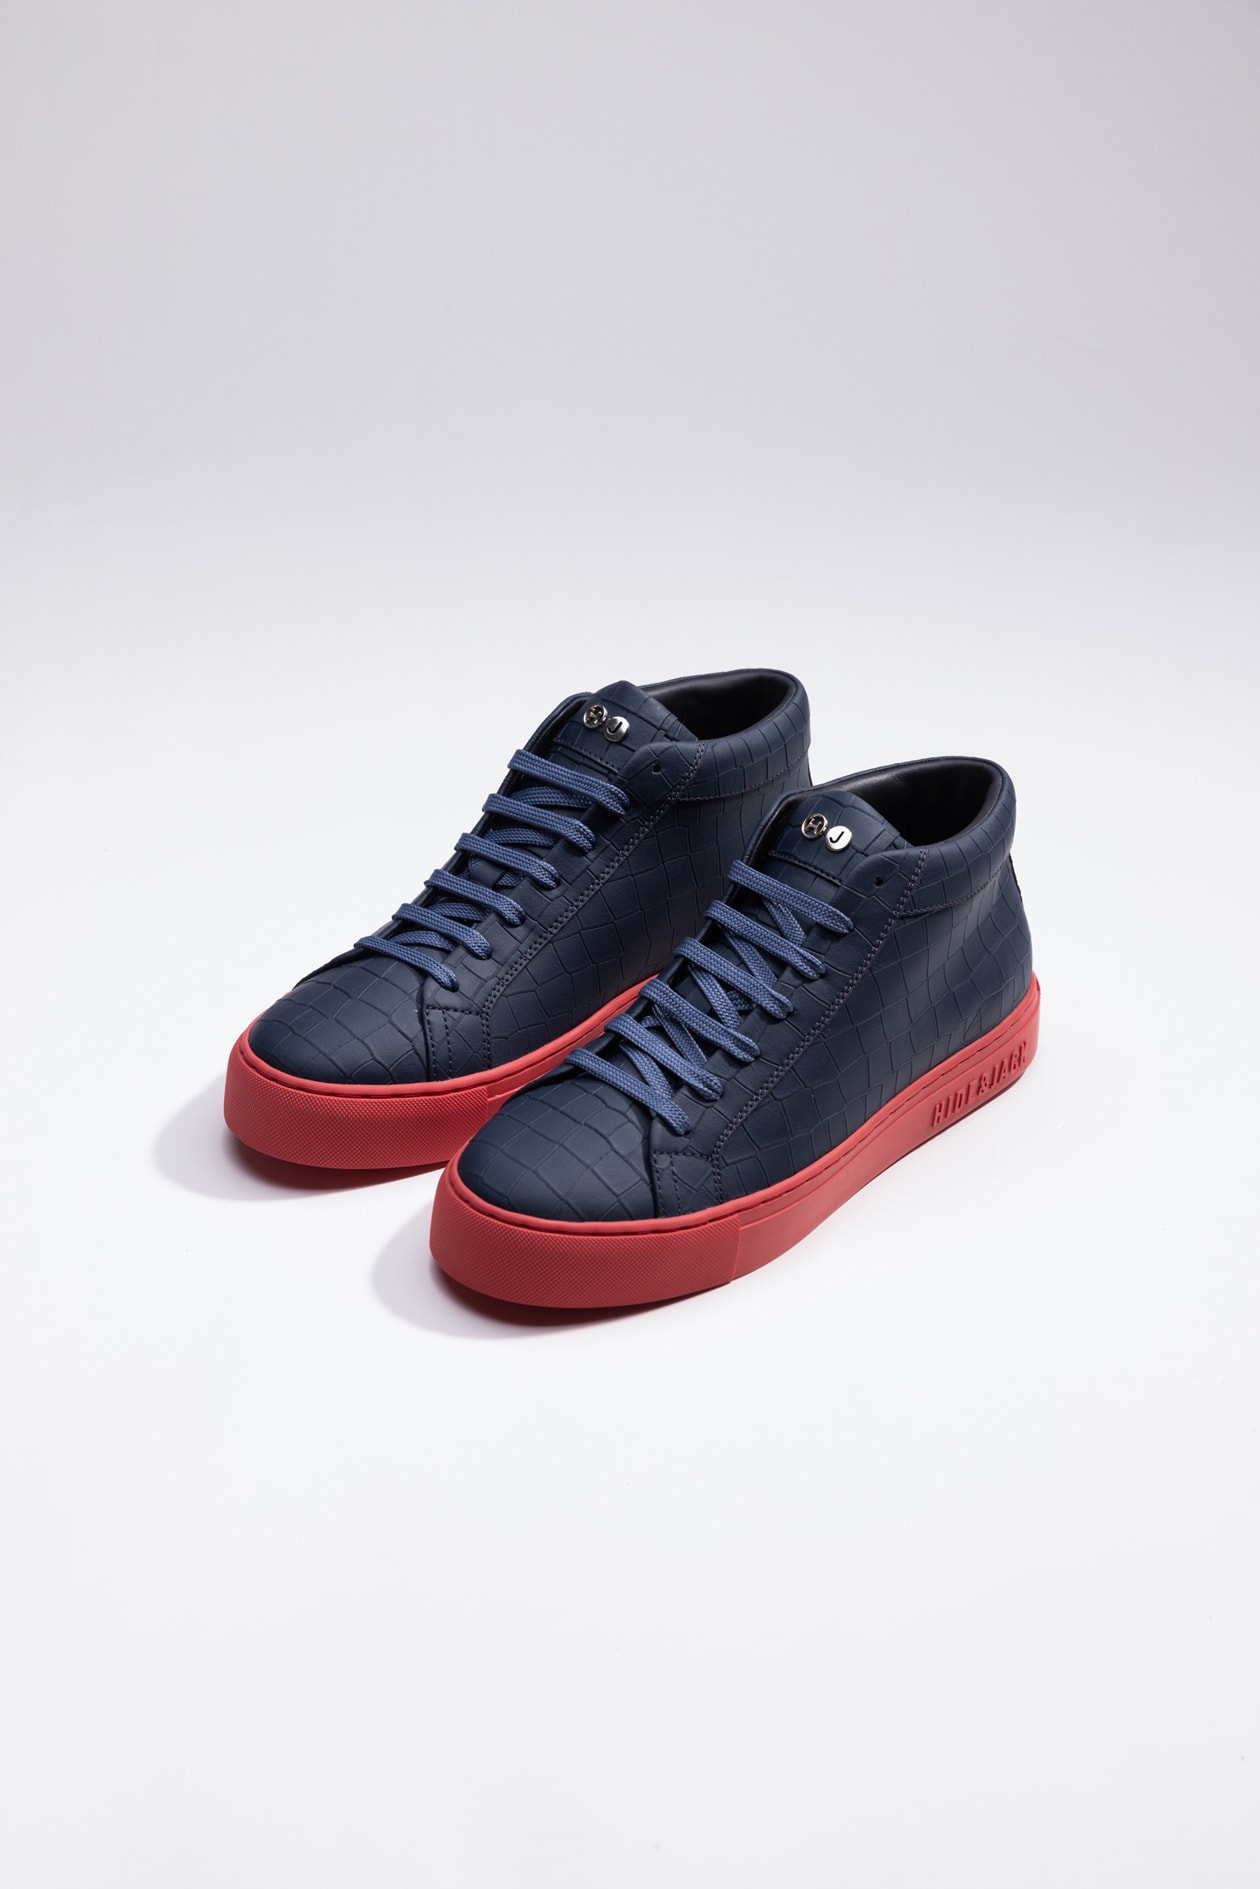 Hide&amp;jack High Top Sneaker - Essence Blue Red